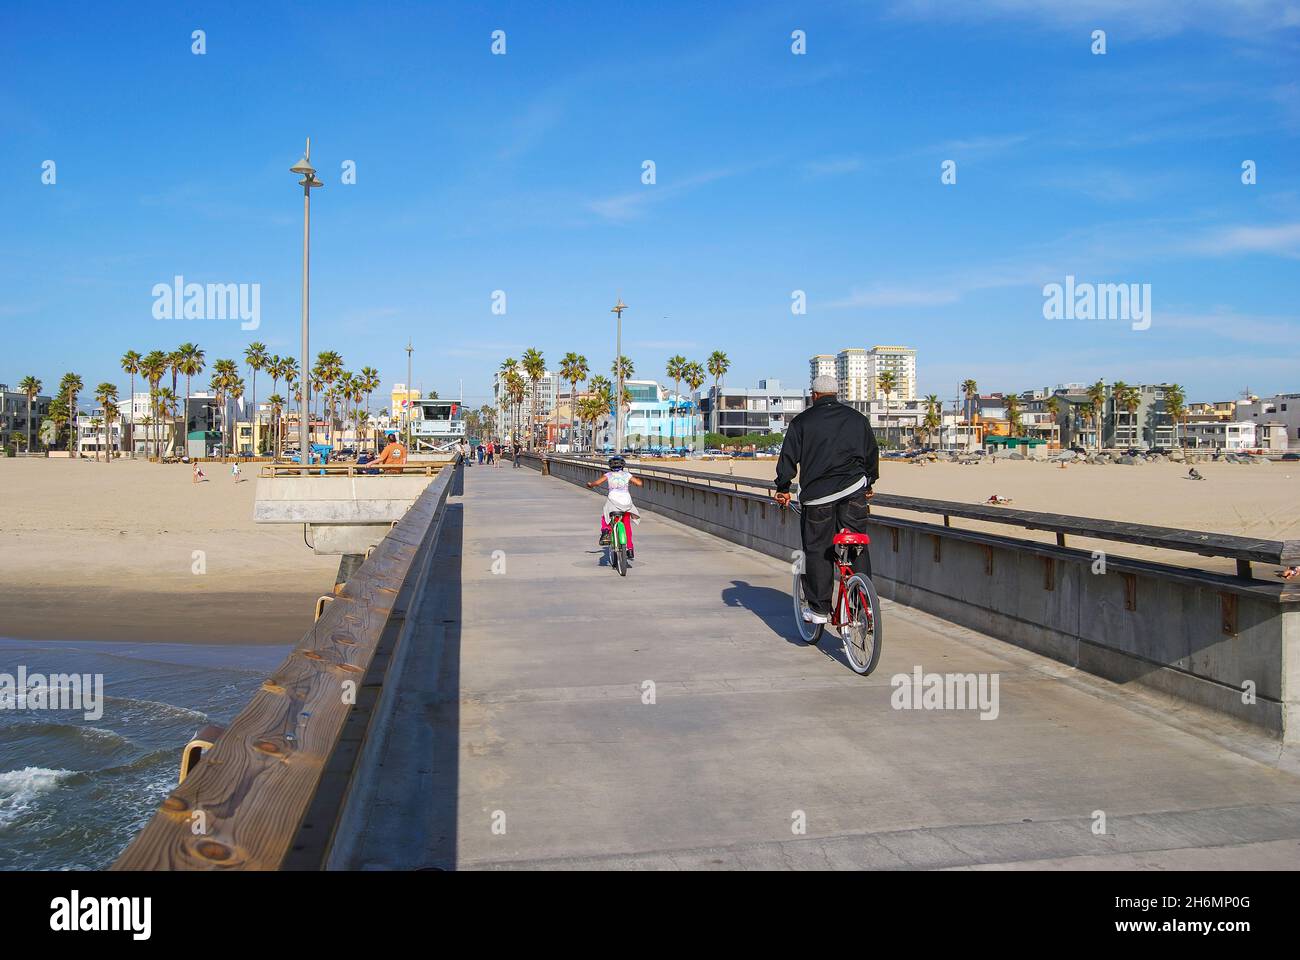 Venice Pier, Venice Beach, Los Angeles, California, United States of ...